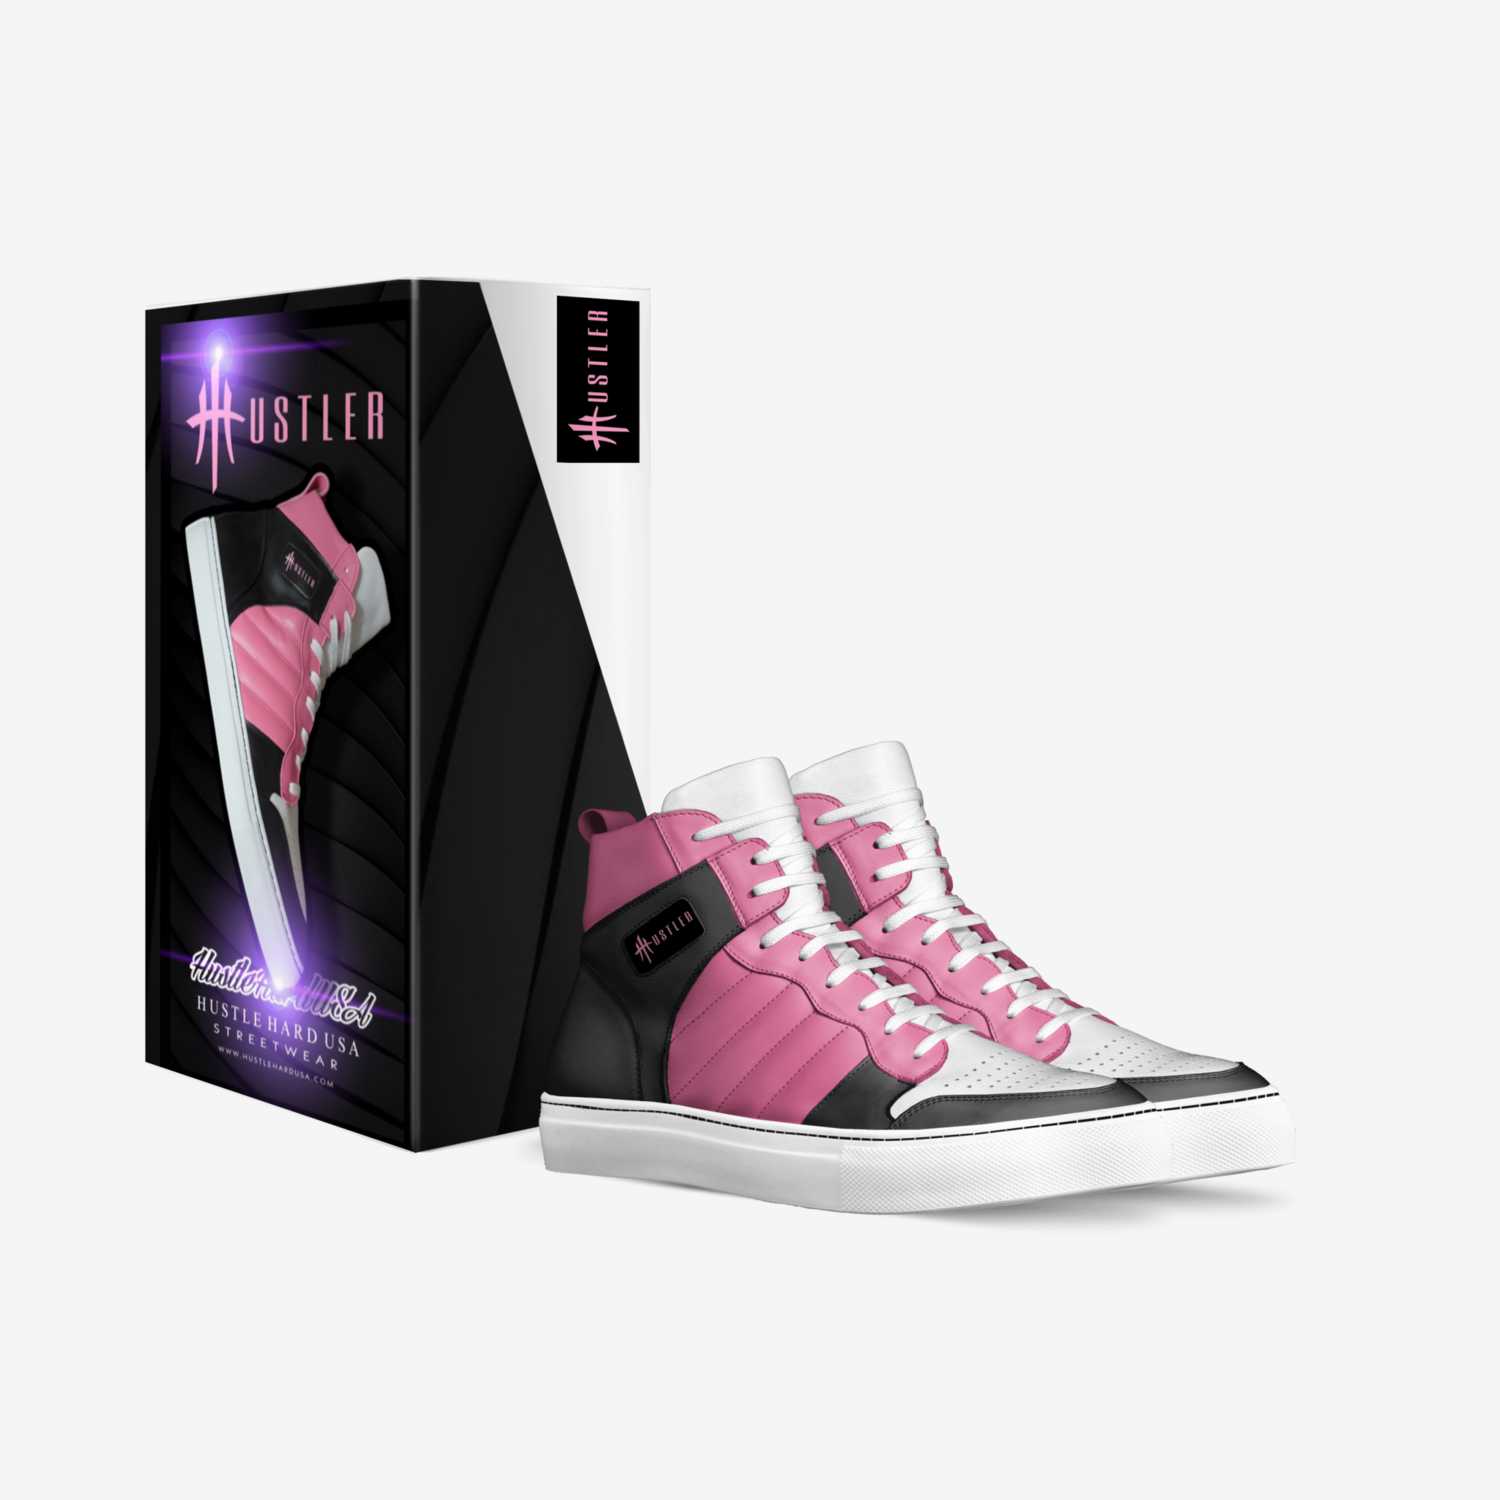 HustleHardUSA custom made in Italy shoes by Roger Casanova | Box view